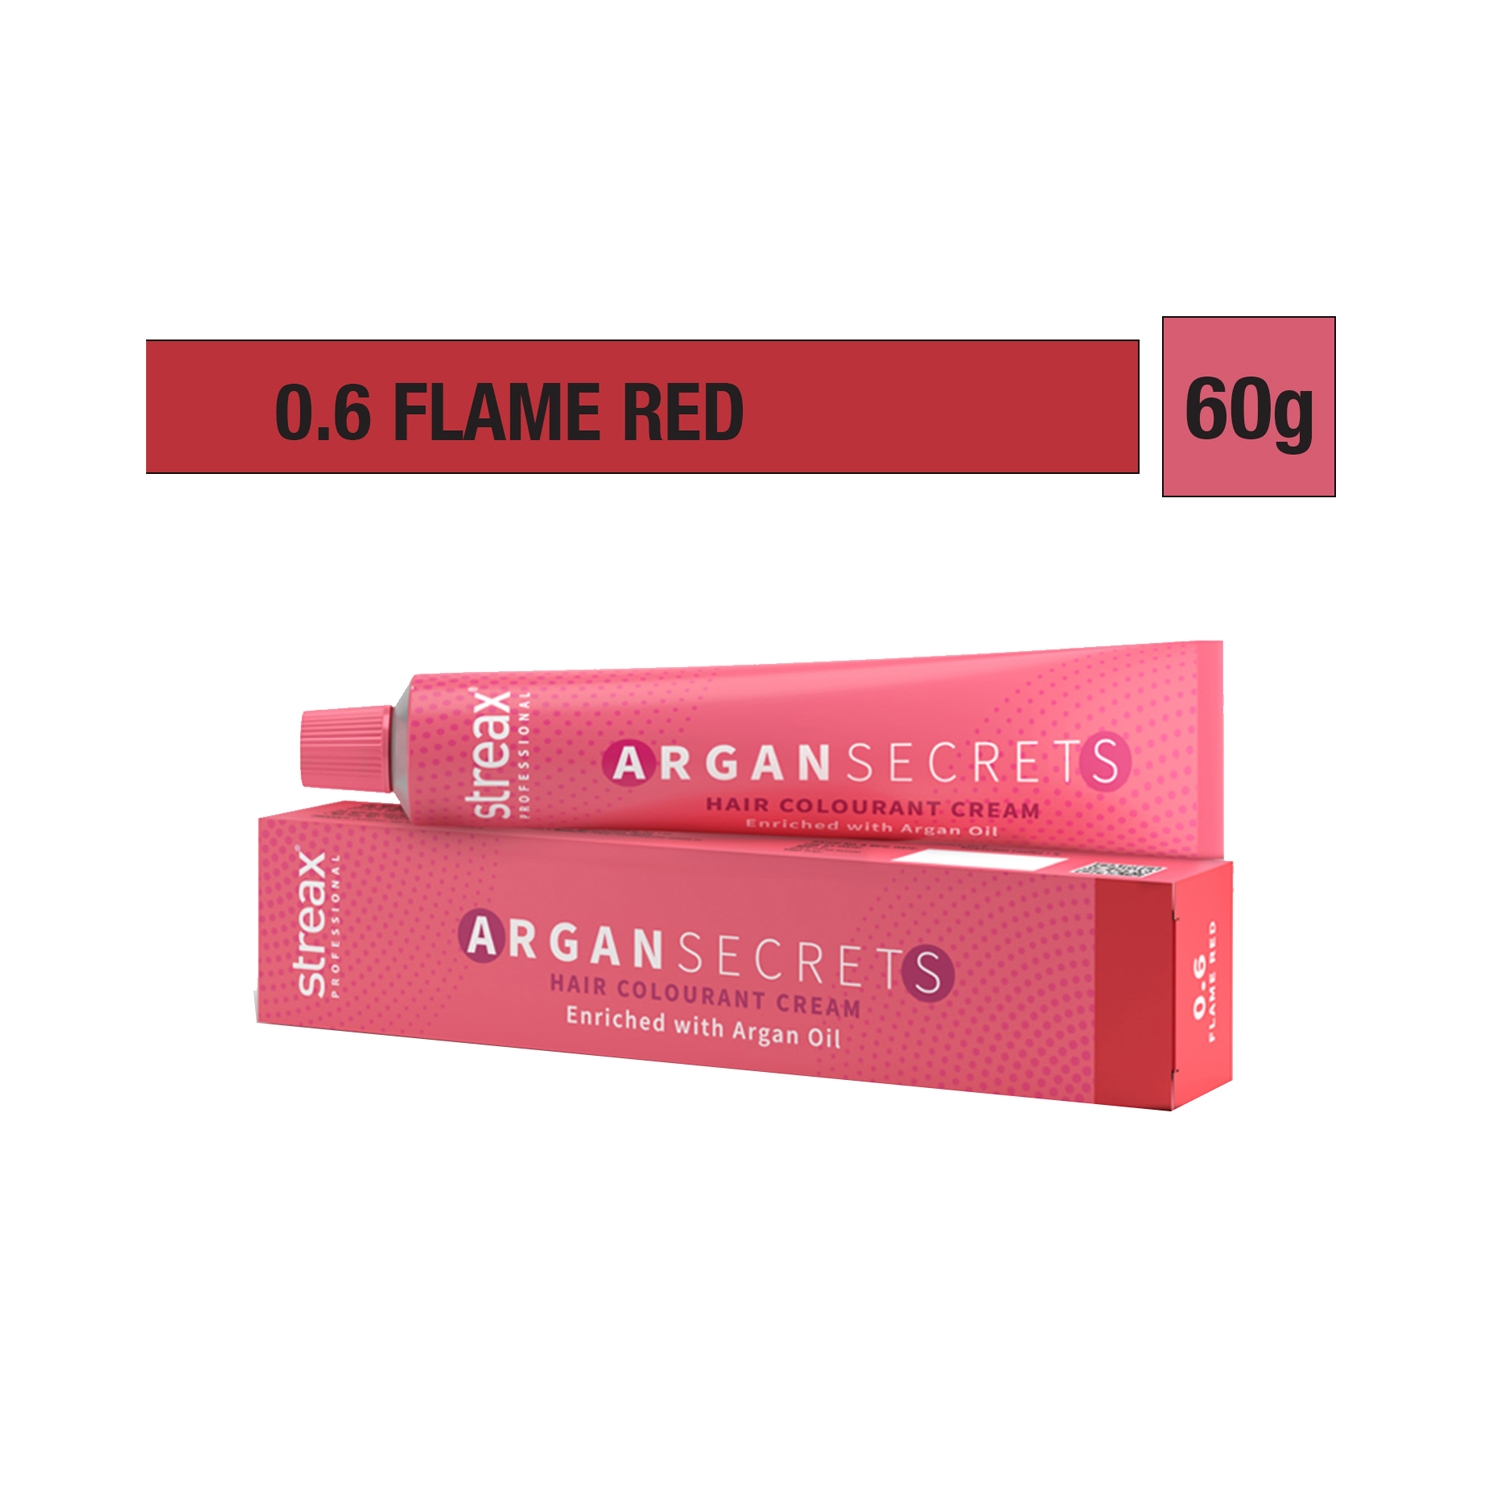 Streax Professional | Streax Professional Argan Secrets Hair Colorant Cream - 0.6 Flame Red (60g)